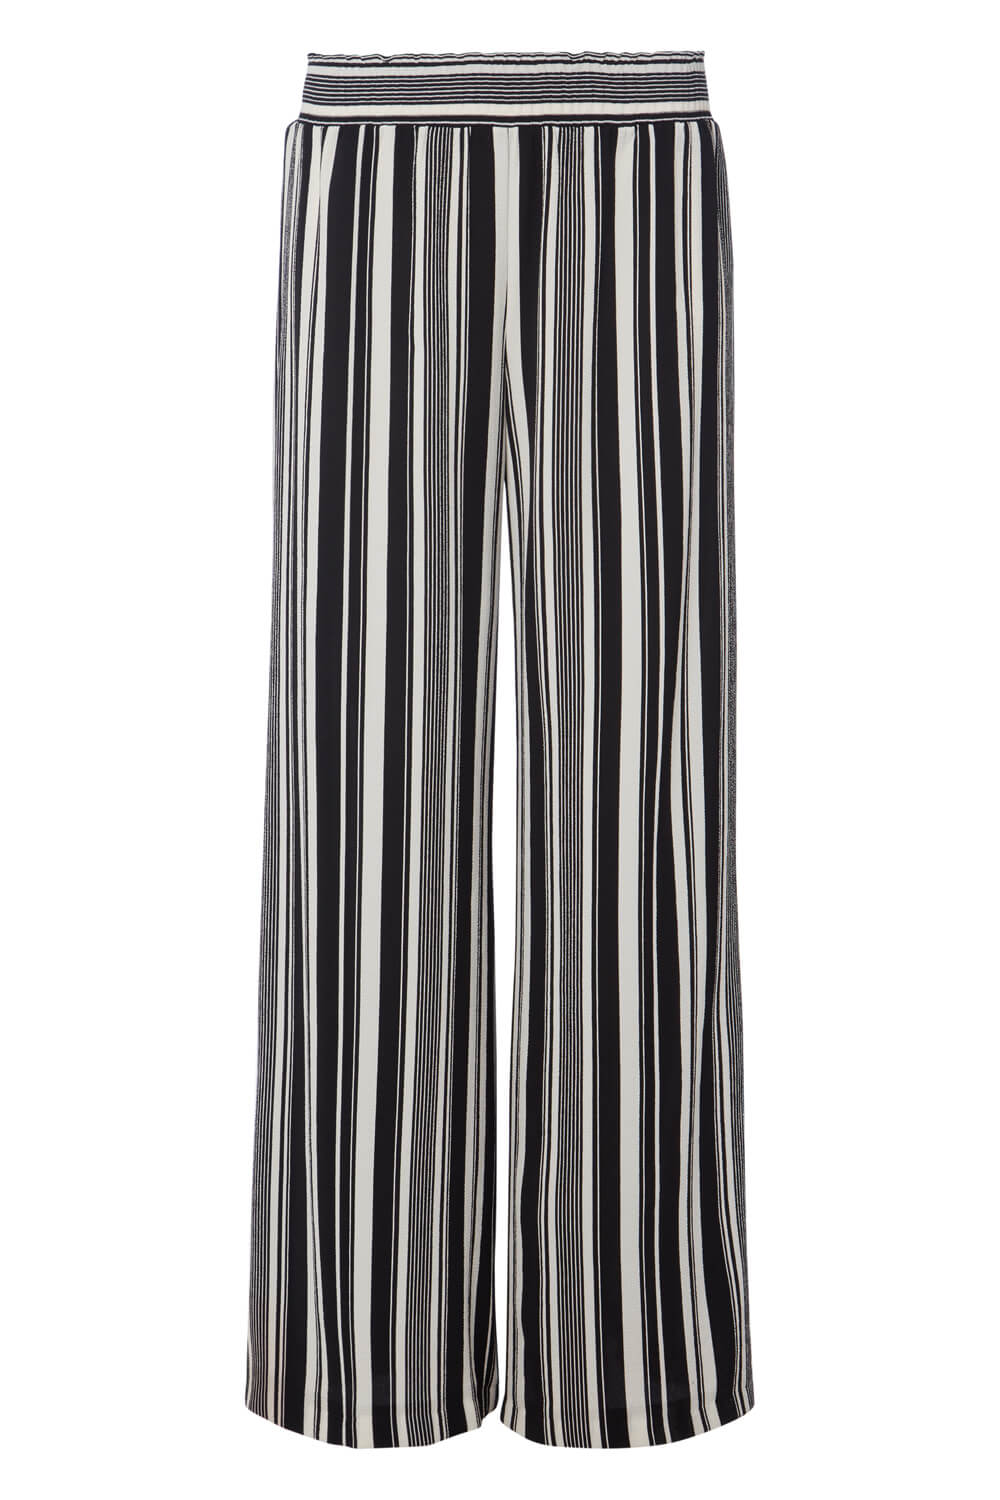 Stripe Wide Leg Trouser in Black - Roman Originals UK